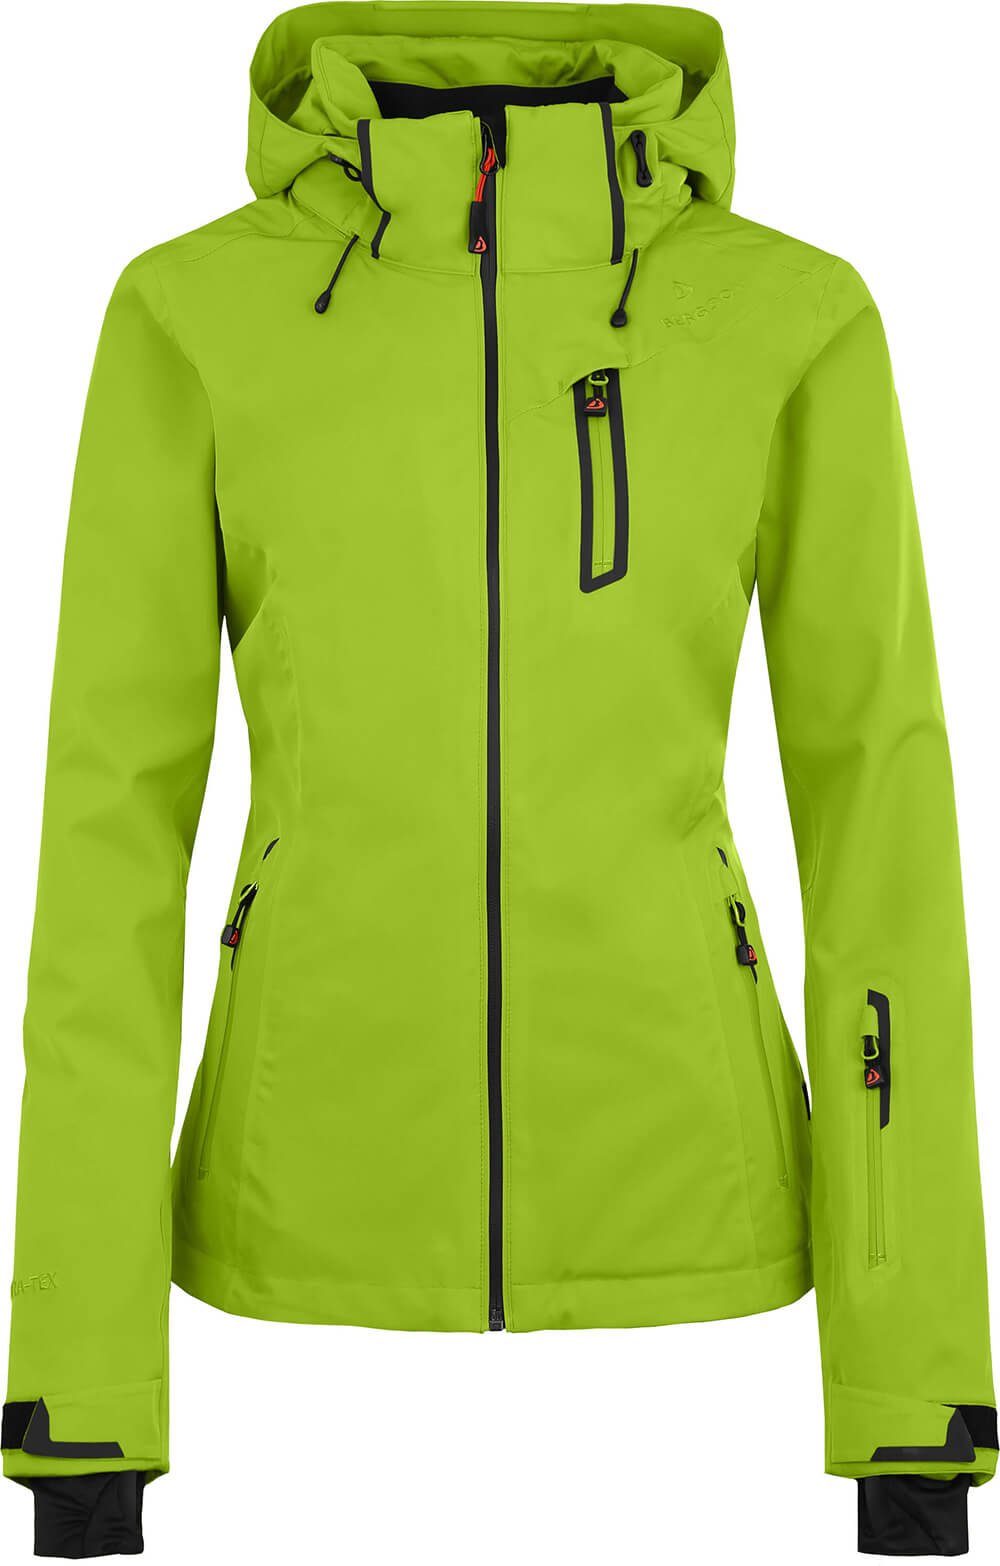 Bergson Skijacke NICE light Damen grün mm 20000 Skijacke, Kurzgrößen, lime unwattiert, Wassersäule